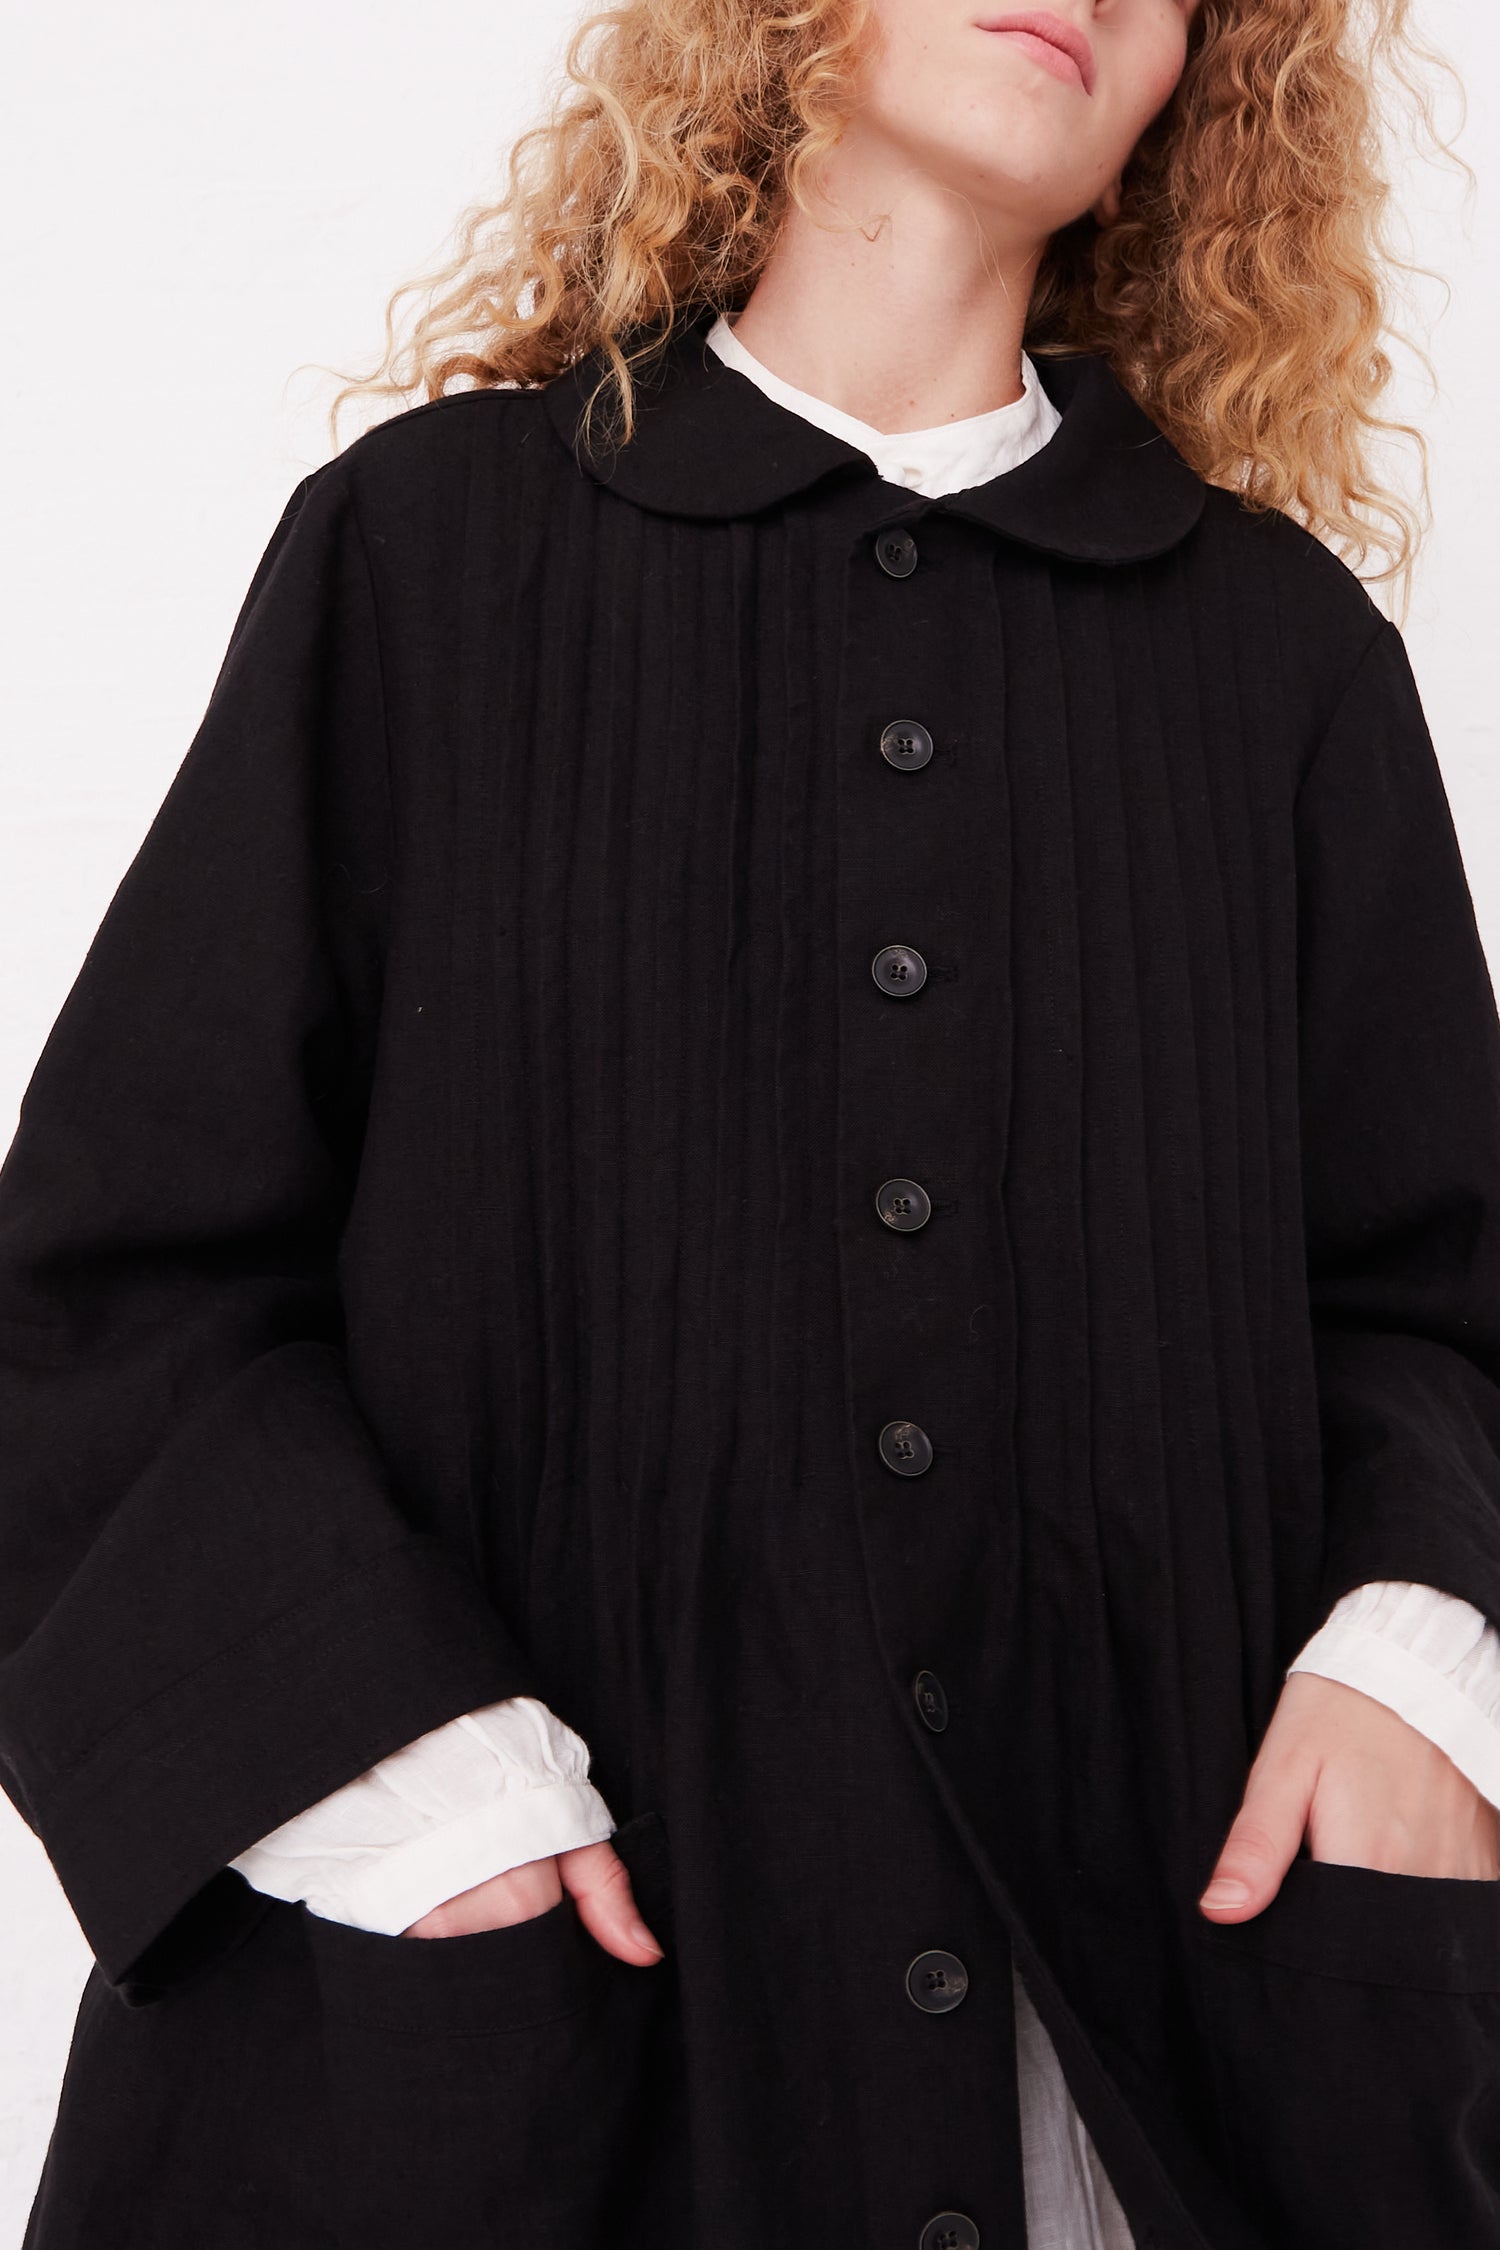 A woman in an Ichi Antiquités Kortrijk Linen Jacket in Black featuring oversized pockets.